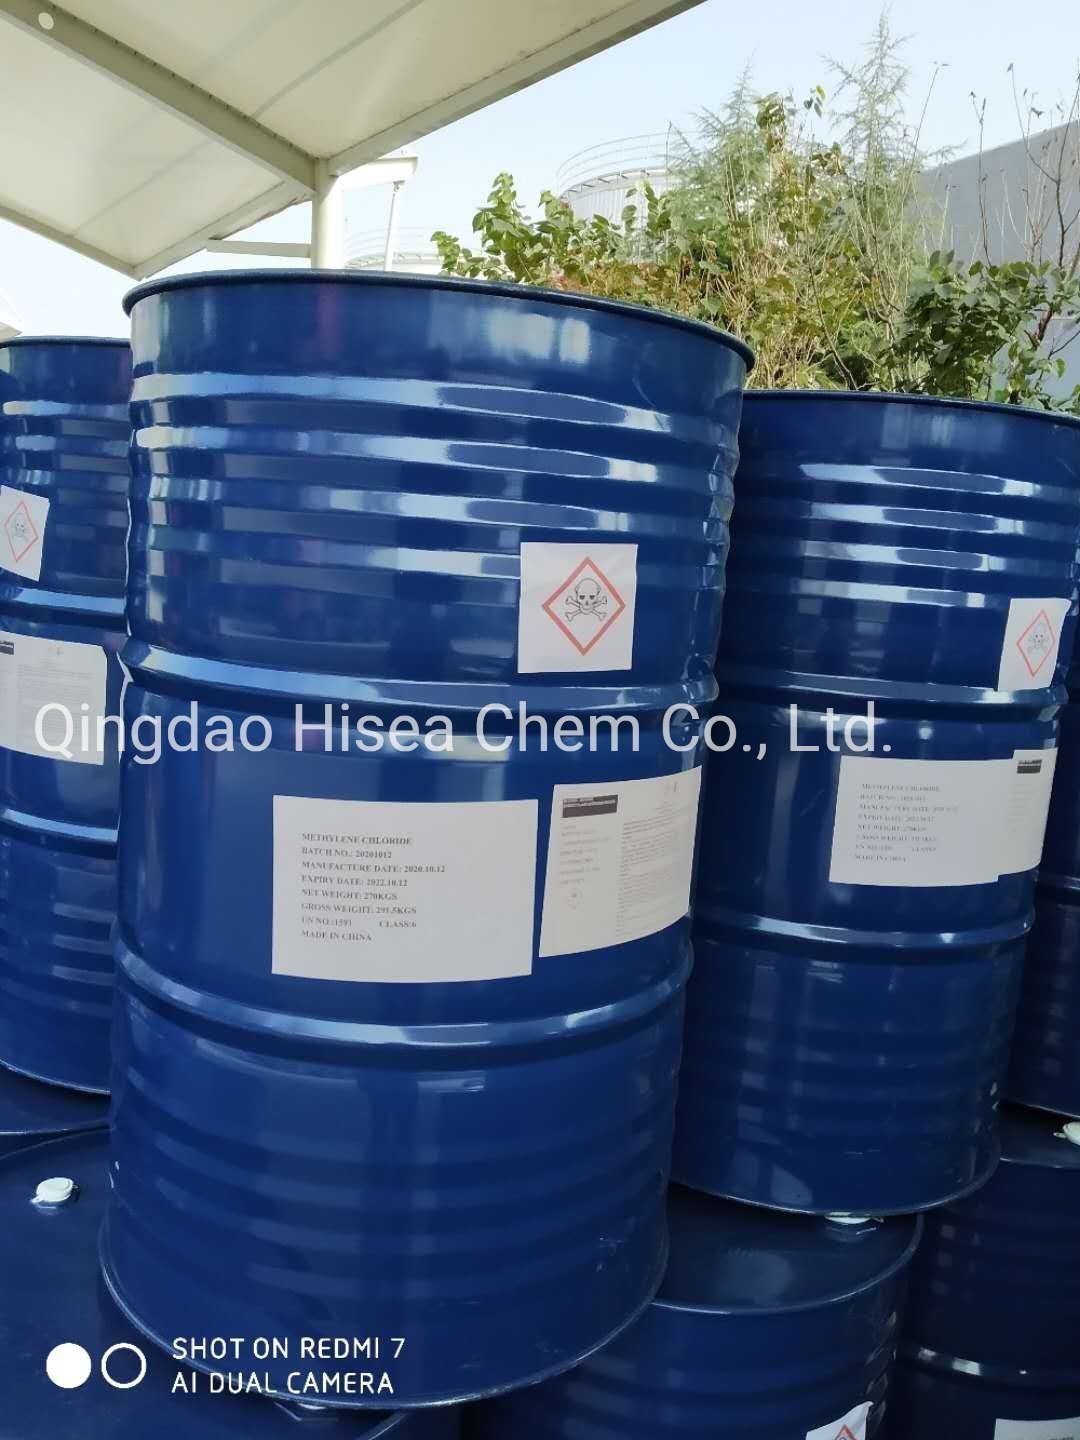 Plasticizer Tidak Beracun untuk PVC 99,7% Diisononyl Phthalate DINP CAS 28553-12-0 